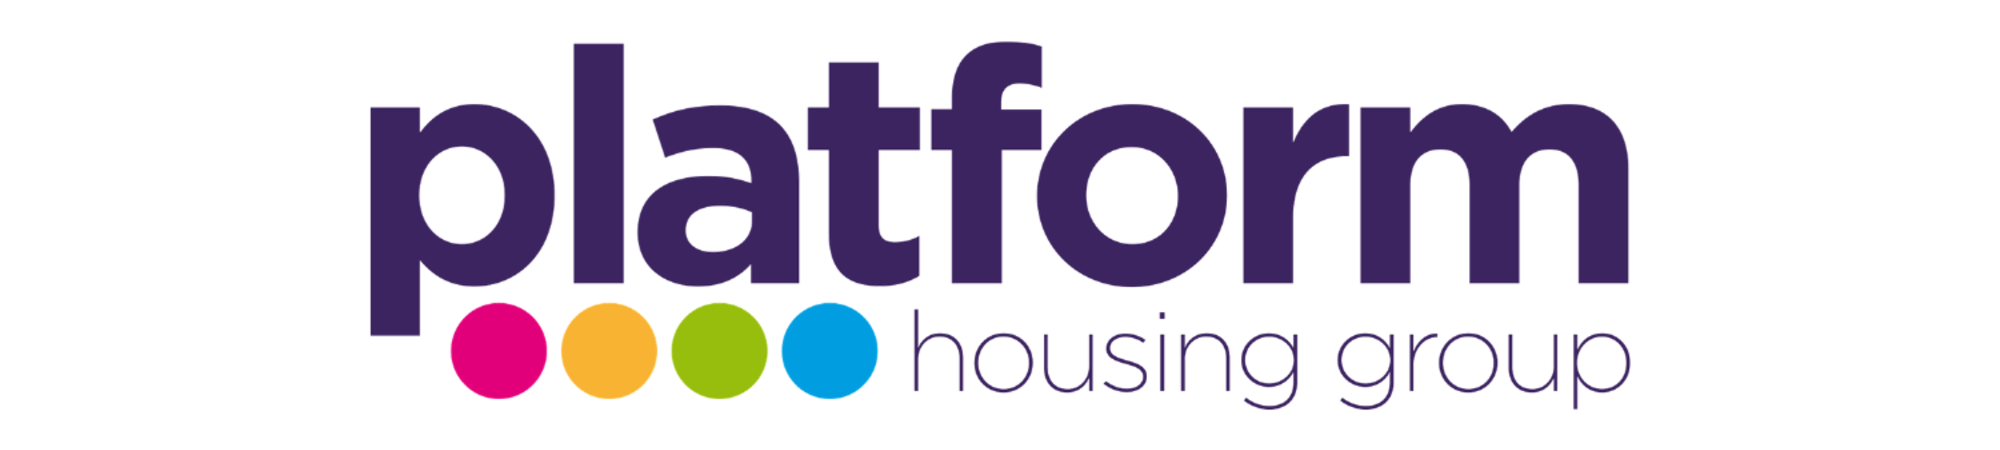 Platform Housing Group Case Study With Hewett Recruitment